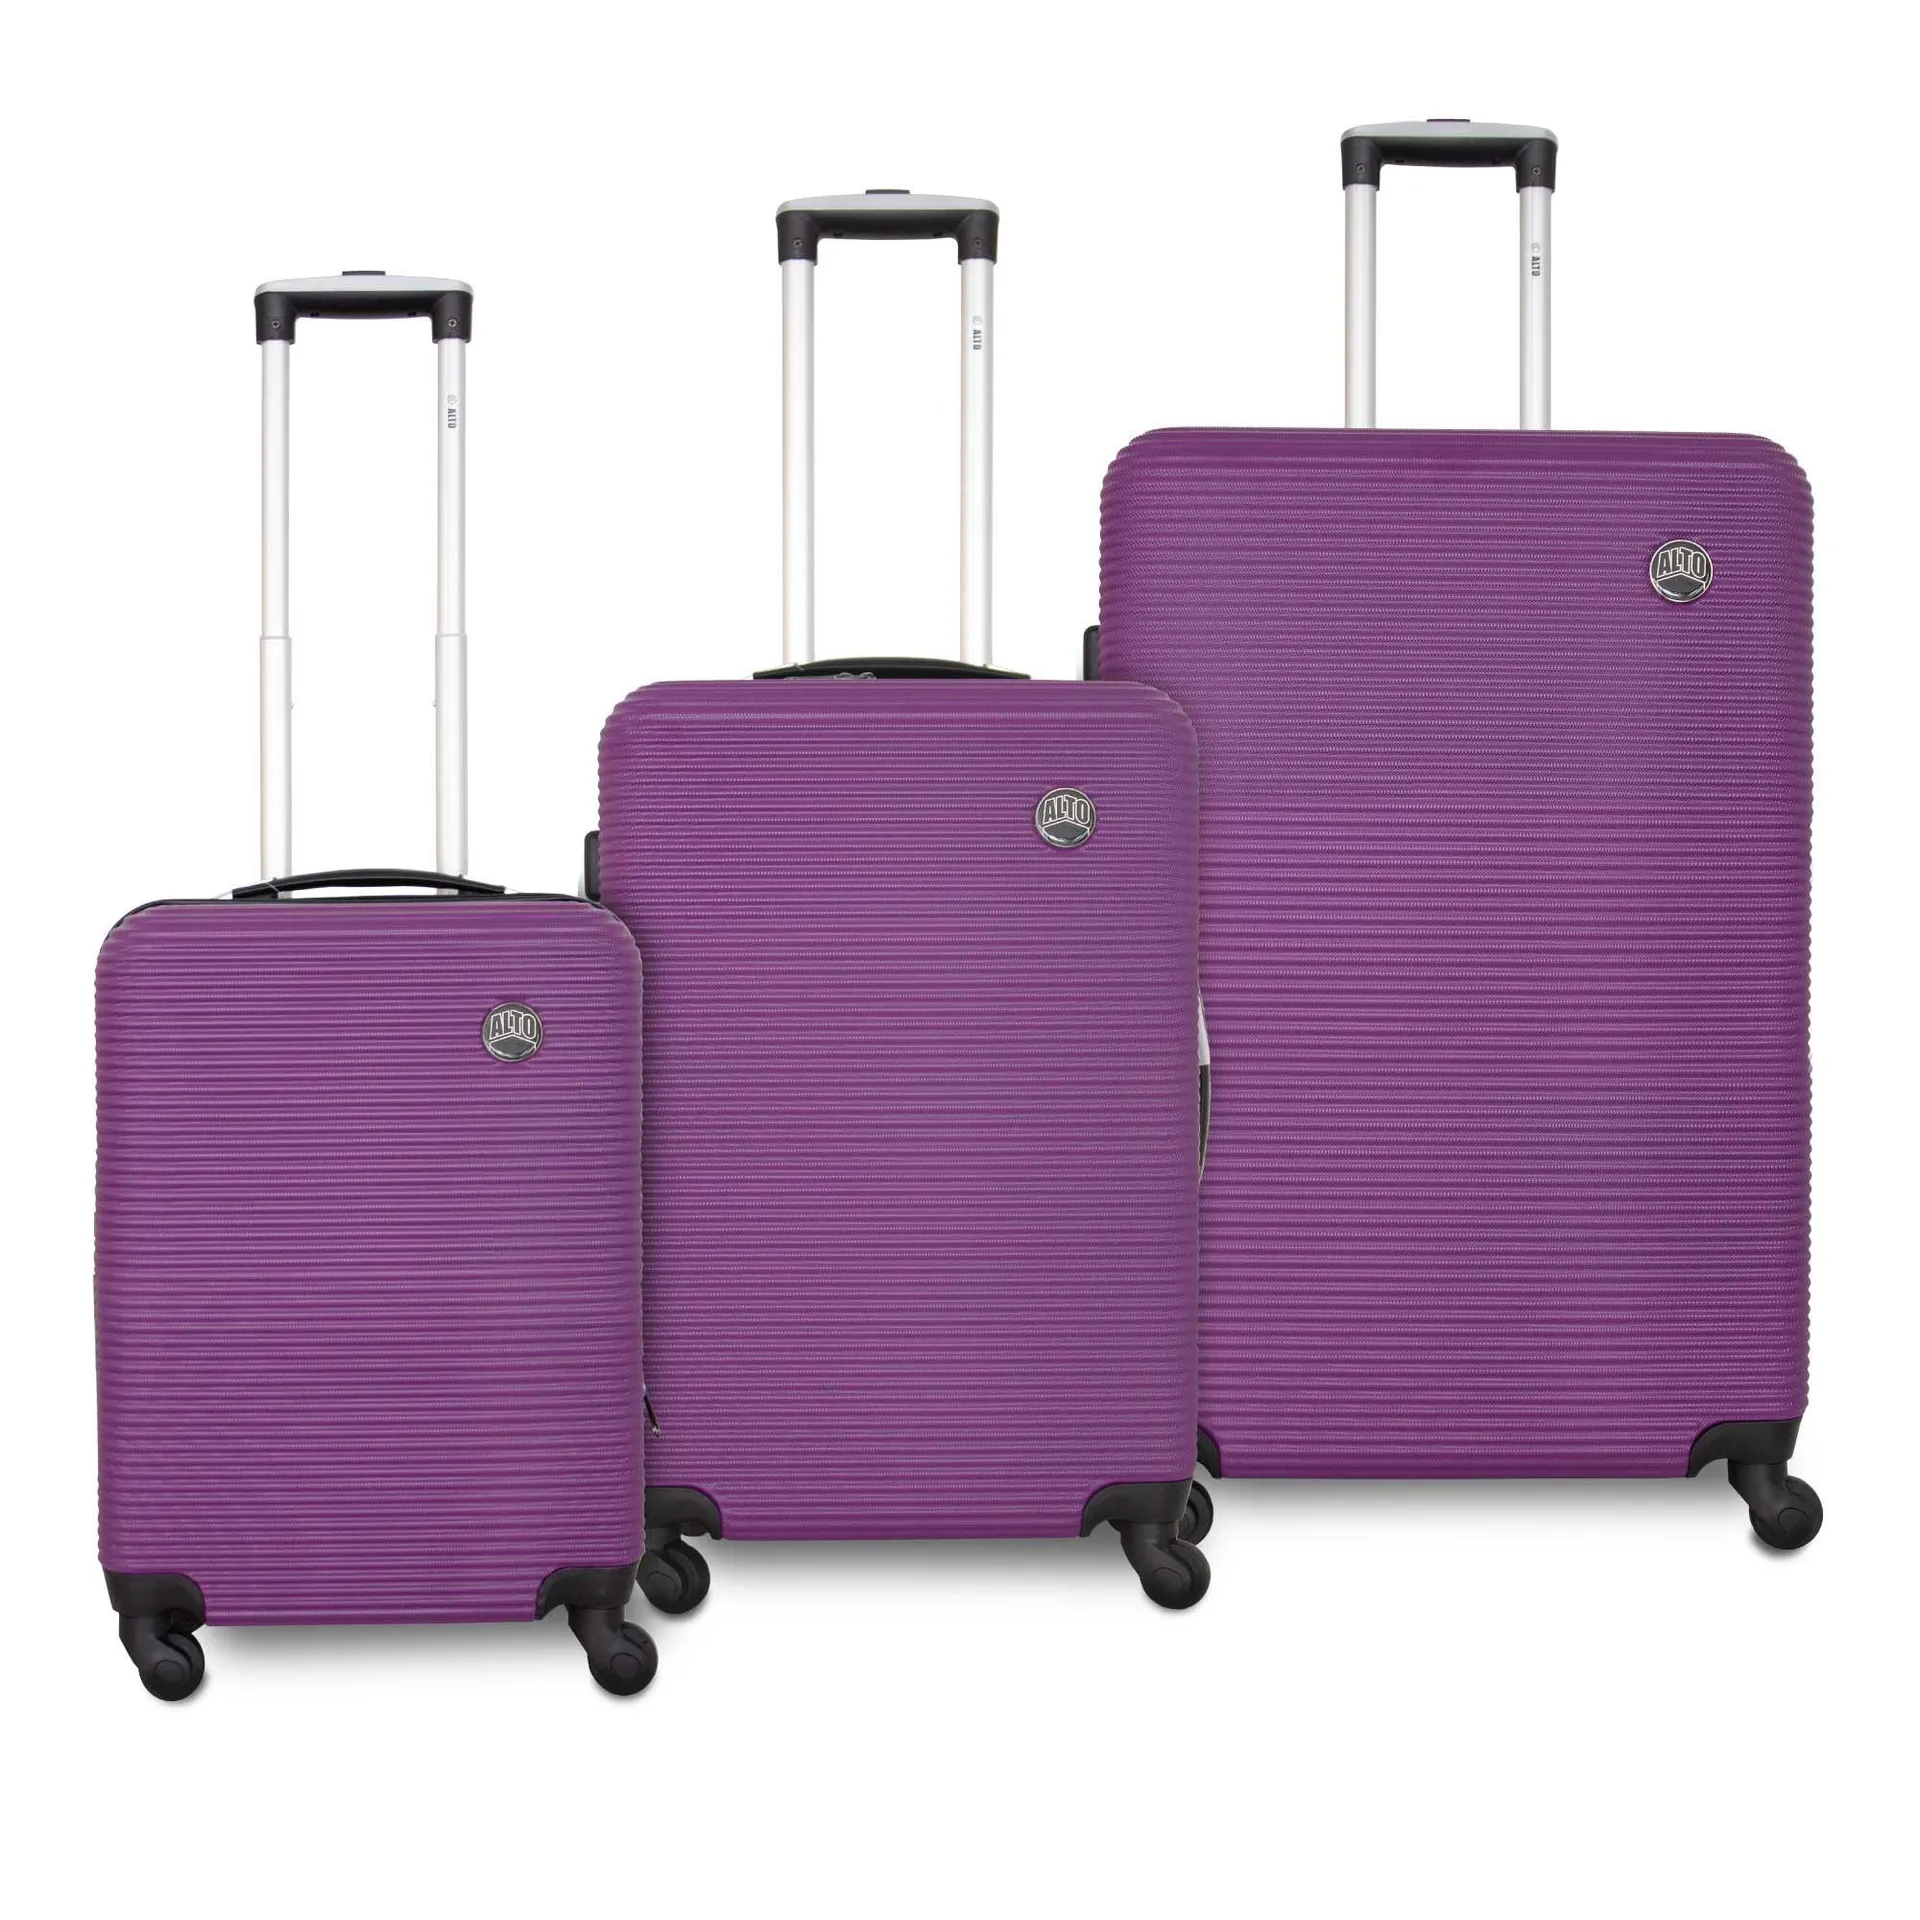 Alto Ultra ABS Luggage Suitcase - Purple